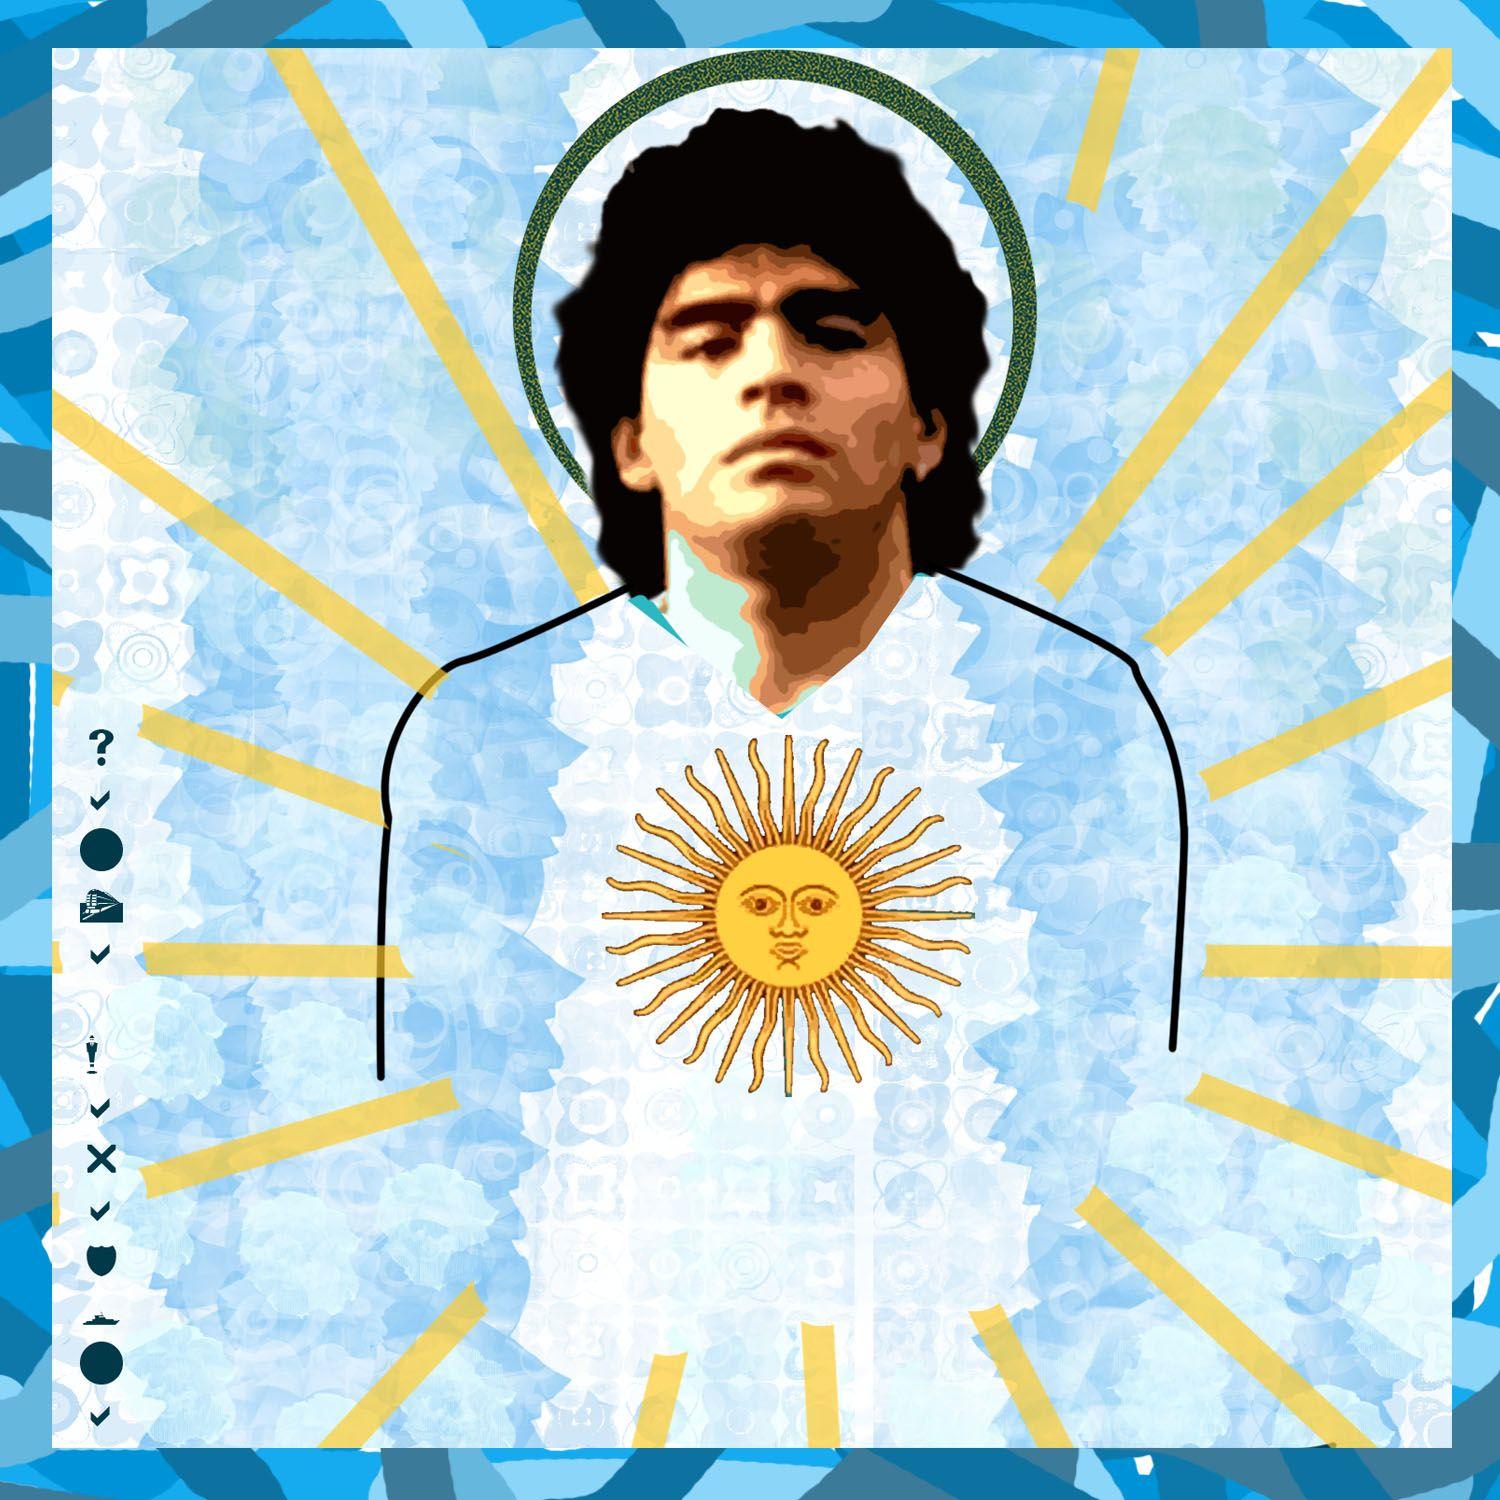 Diego Maradona wallpaper, Football Picture and Photo